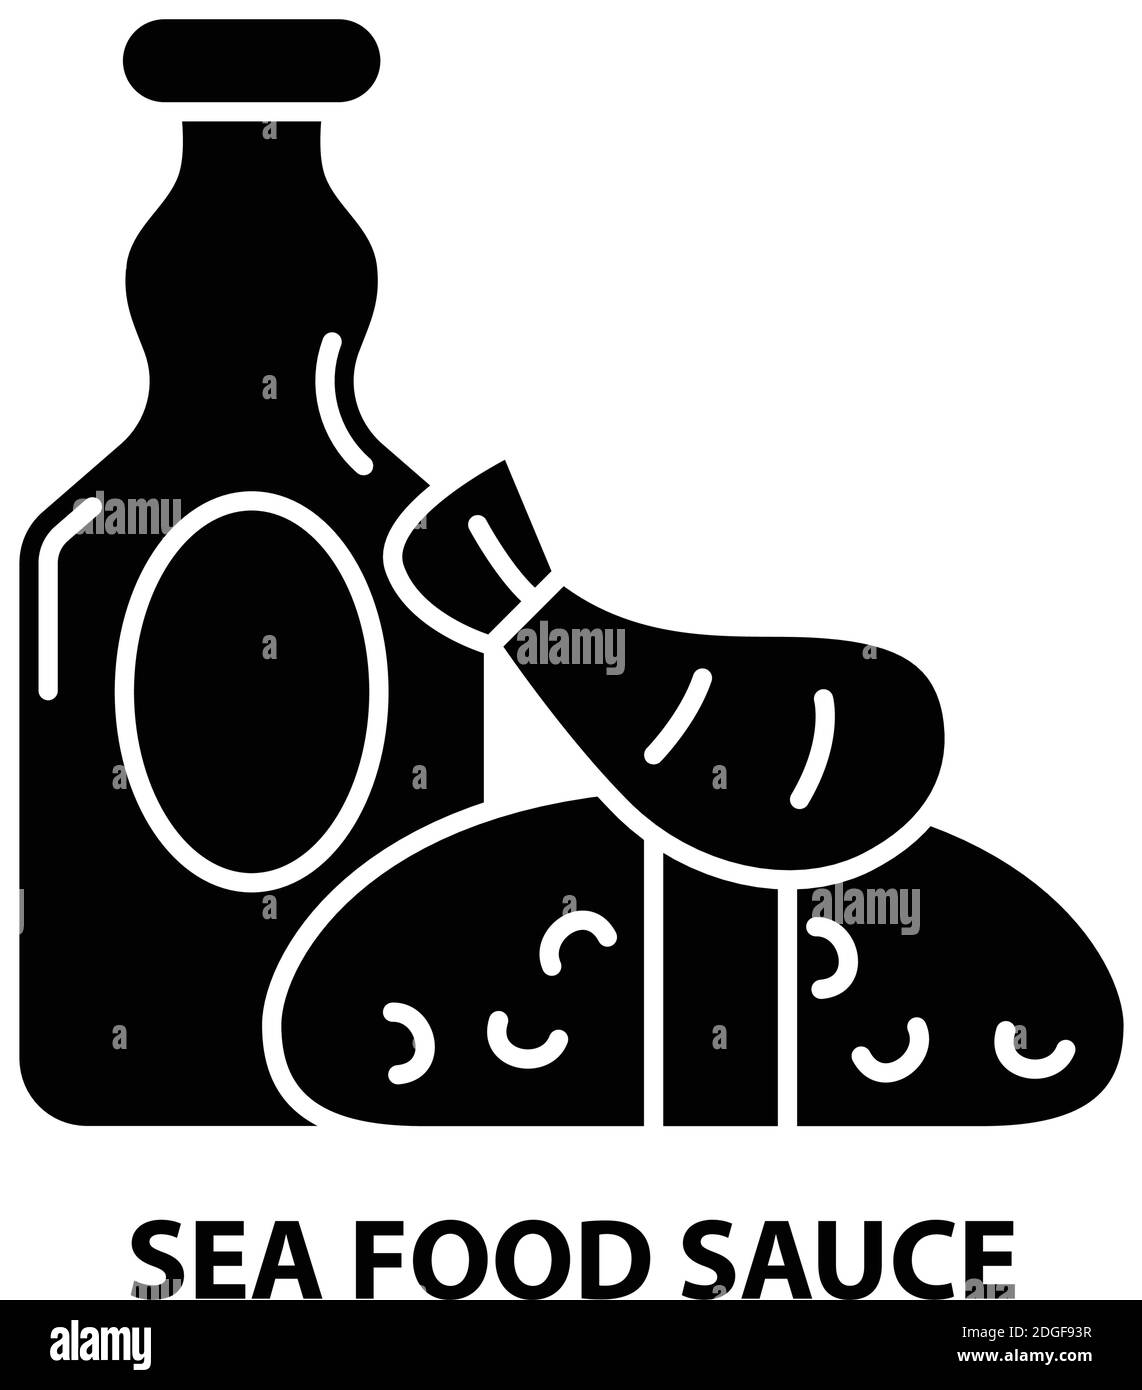 sea food sauce icon, black vector sign with editable strokes, concept illustration Stock Vector